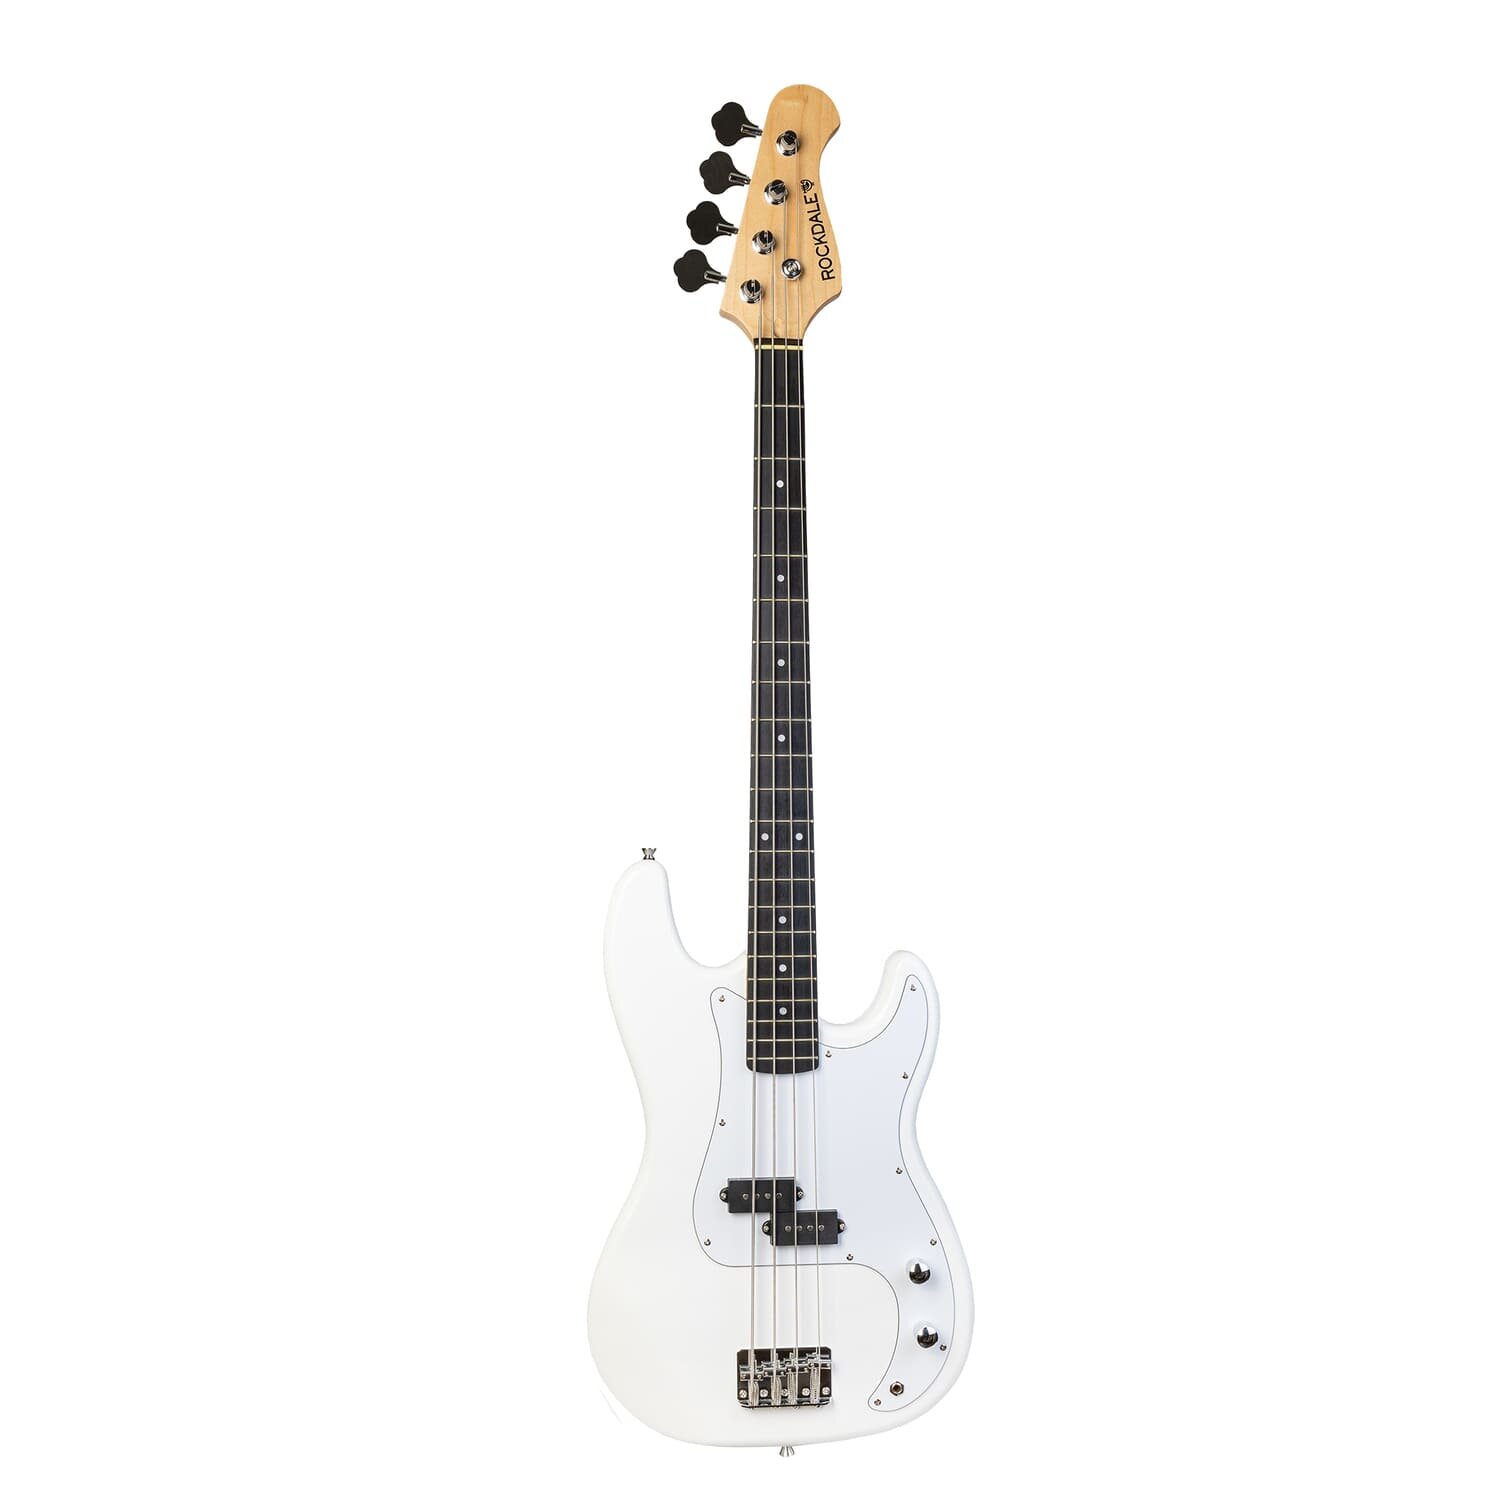 Rockdale Stars PB Bass White бас-гитара пресижн, цвет белый